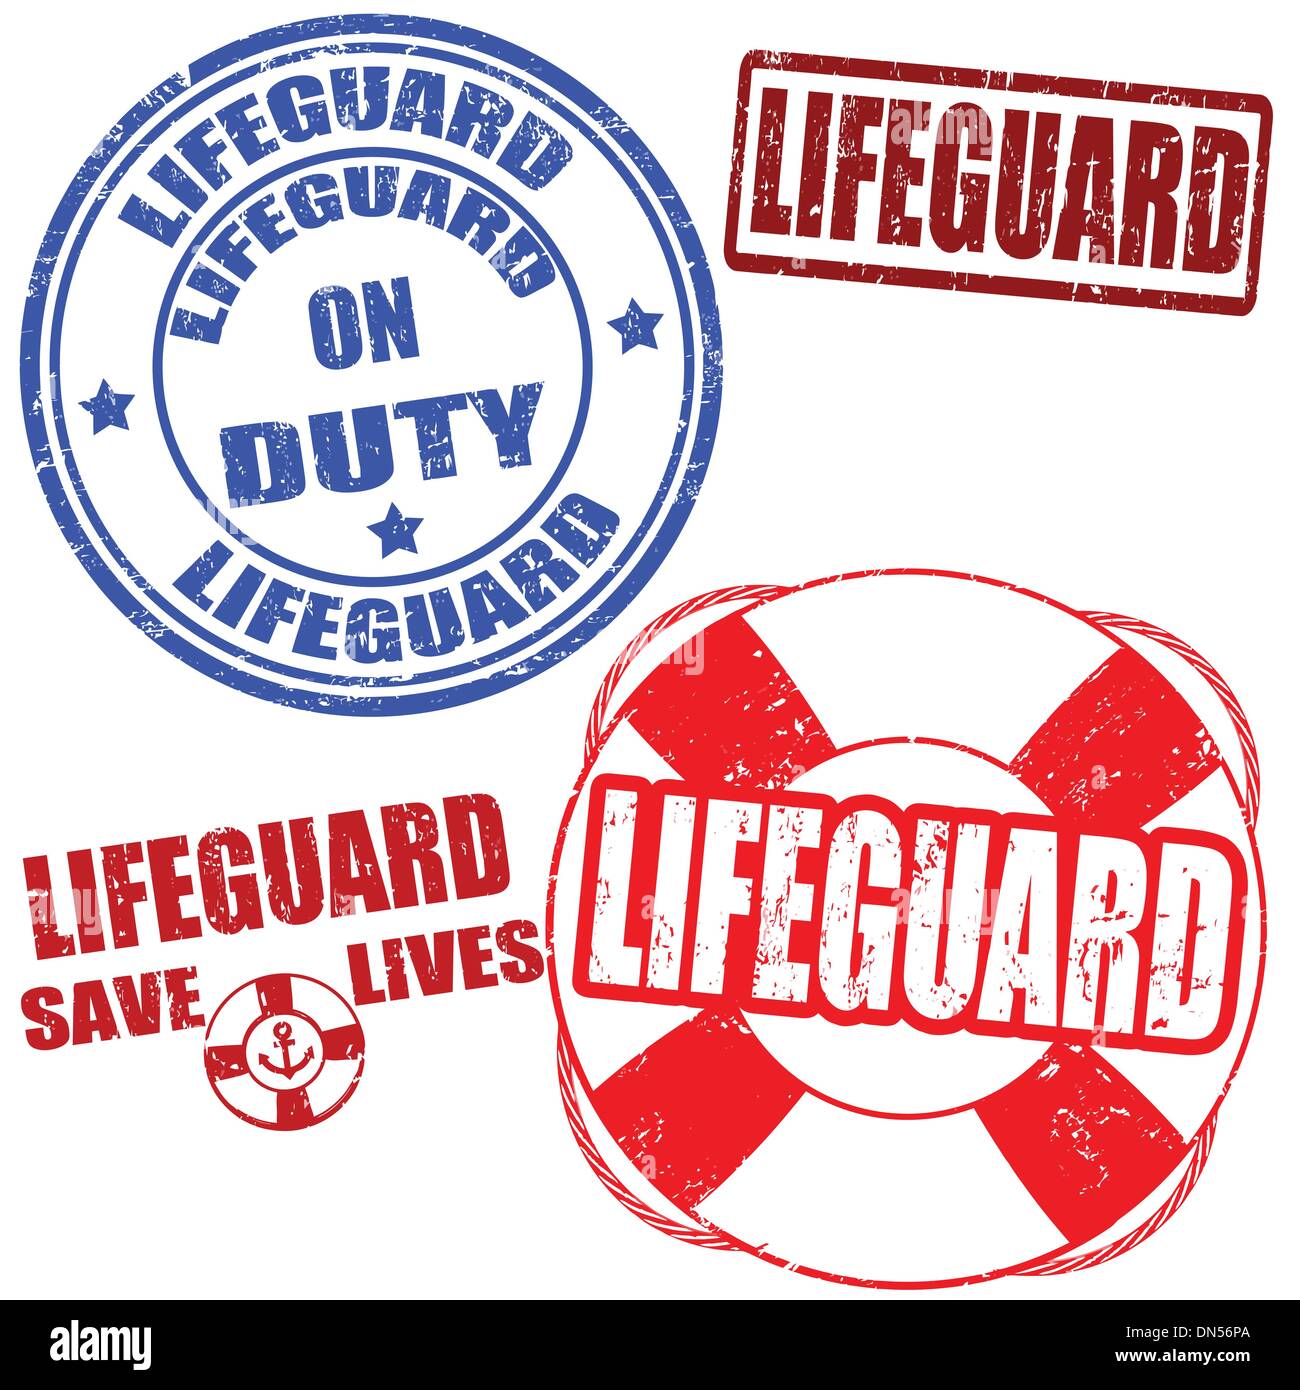 Lifeguard stamps Stock Vector